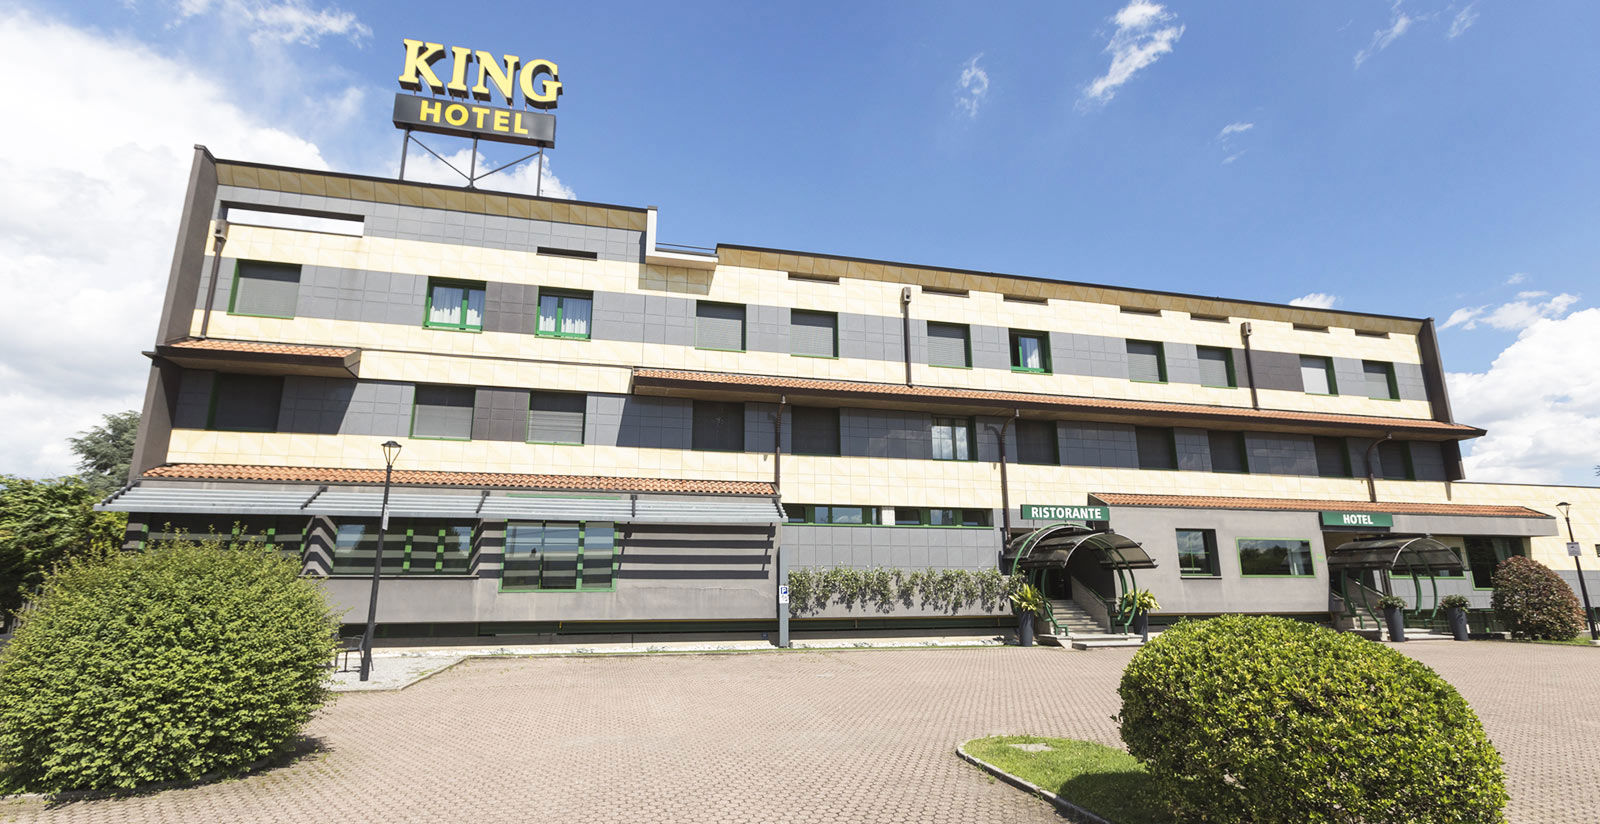 Hotel King - Codici GDS 2